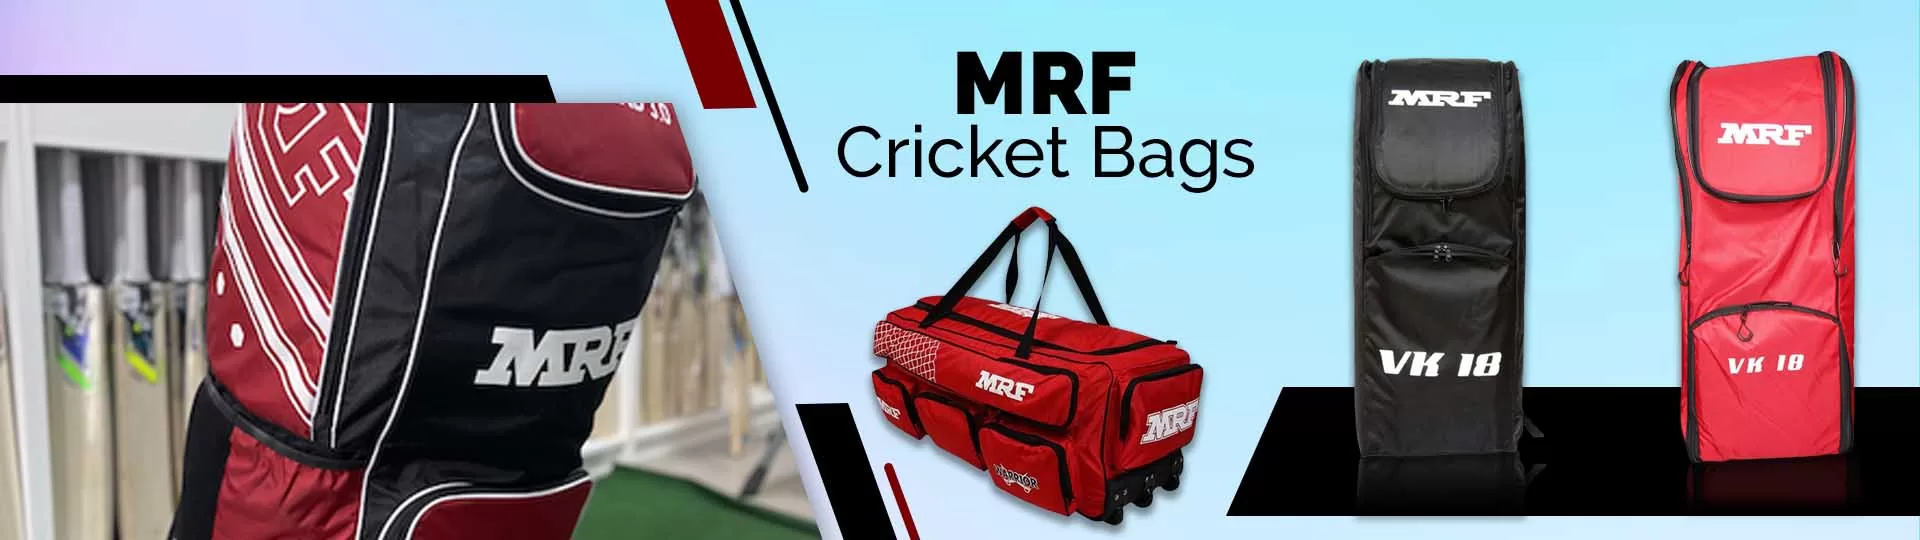 MRF Cricket Bags